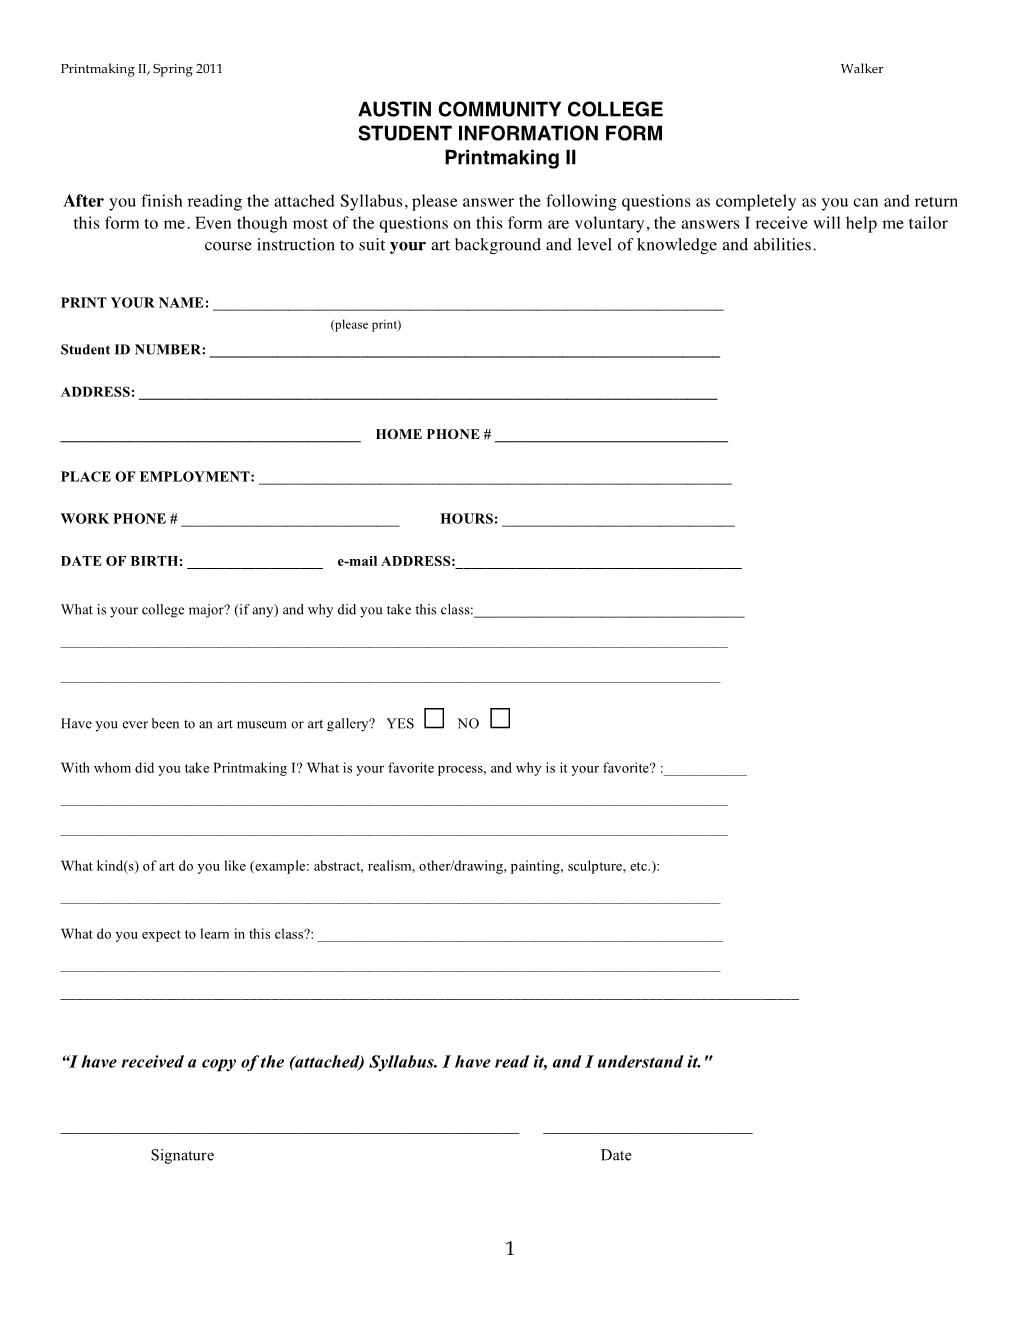 1 Austin Community College Student Information Form